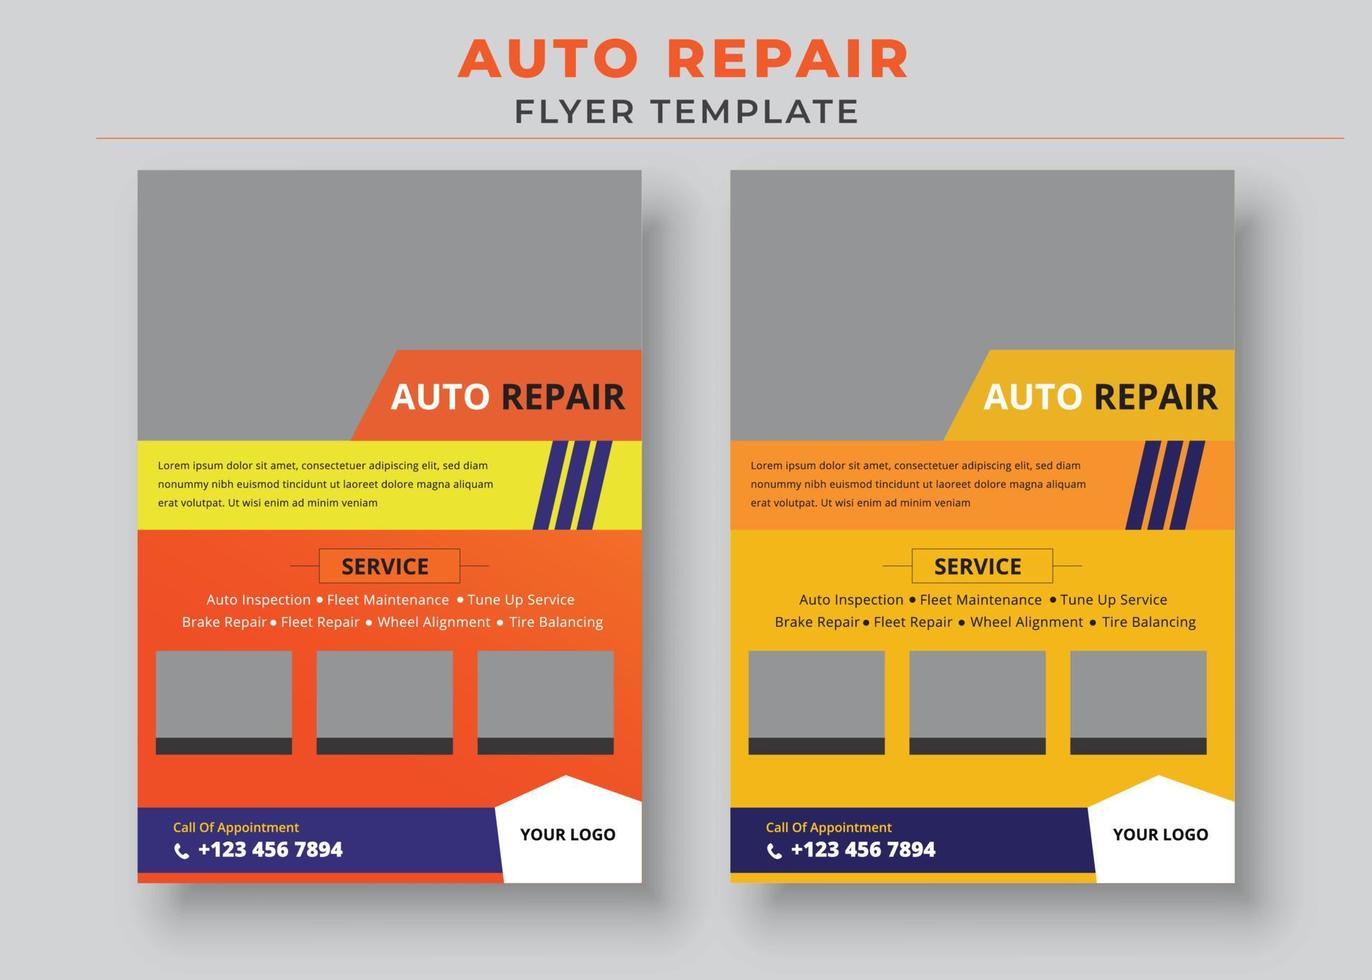 Auto Repair Flyer Template, Automobile Service flyer vector